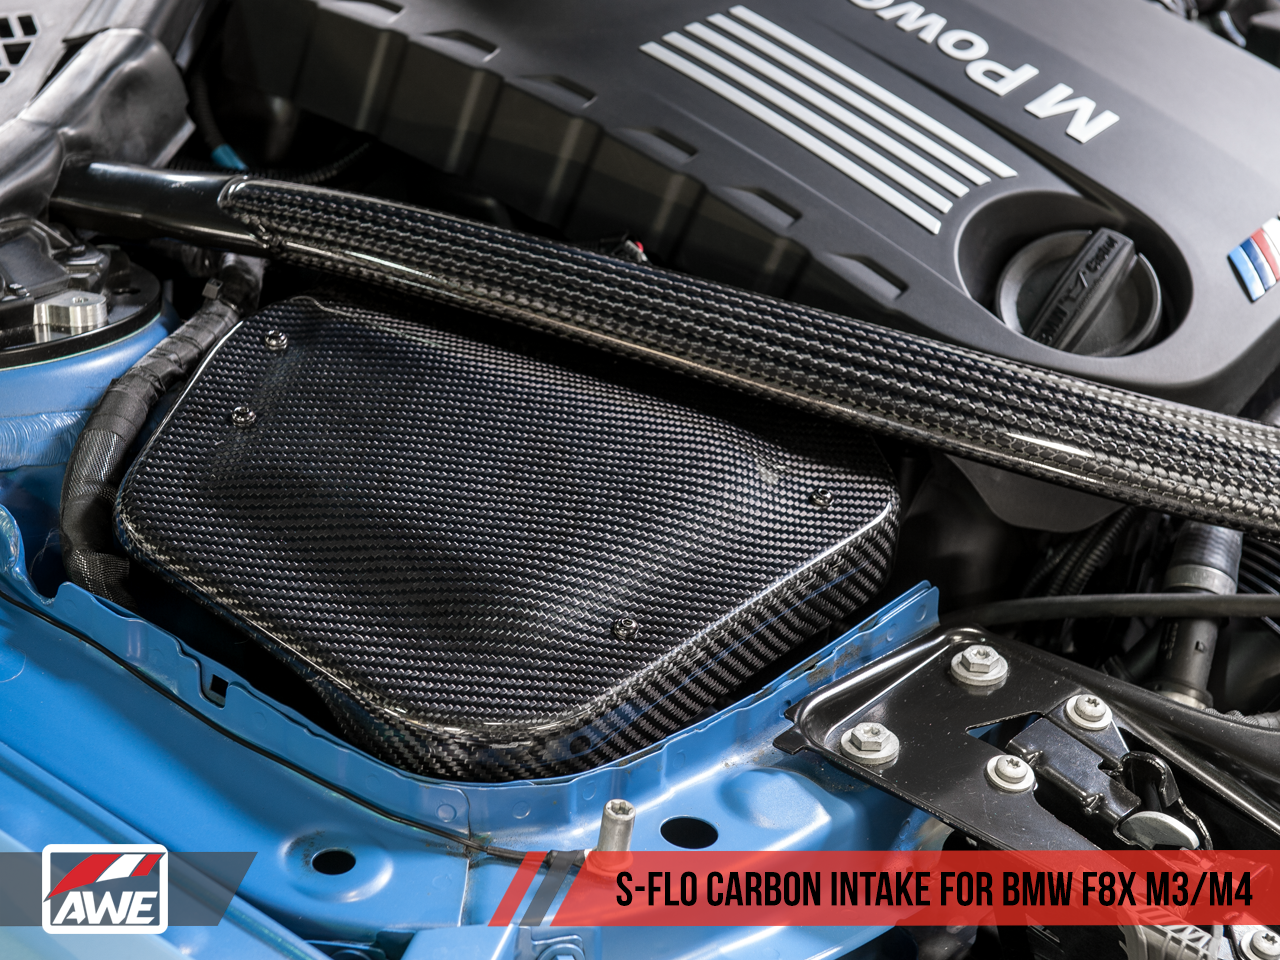 AWE S-FLO Carbon Intake for F8X M3/M4